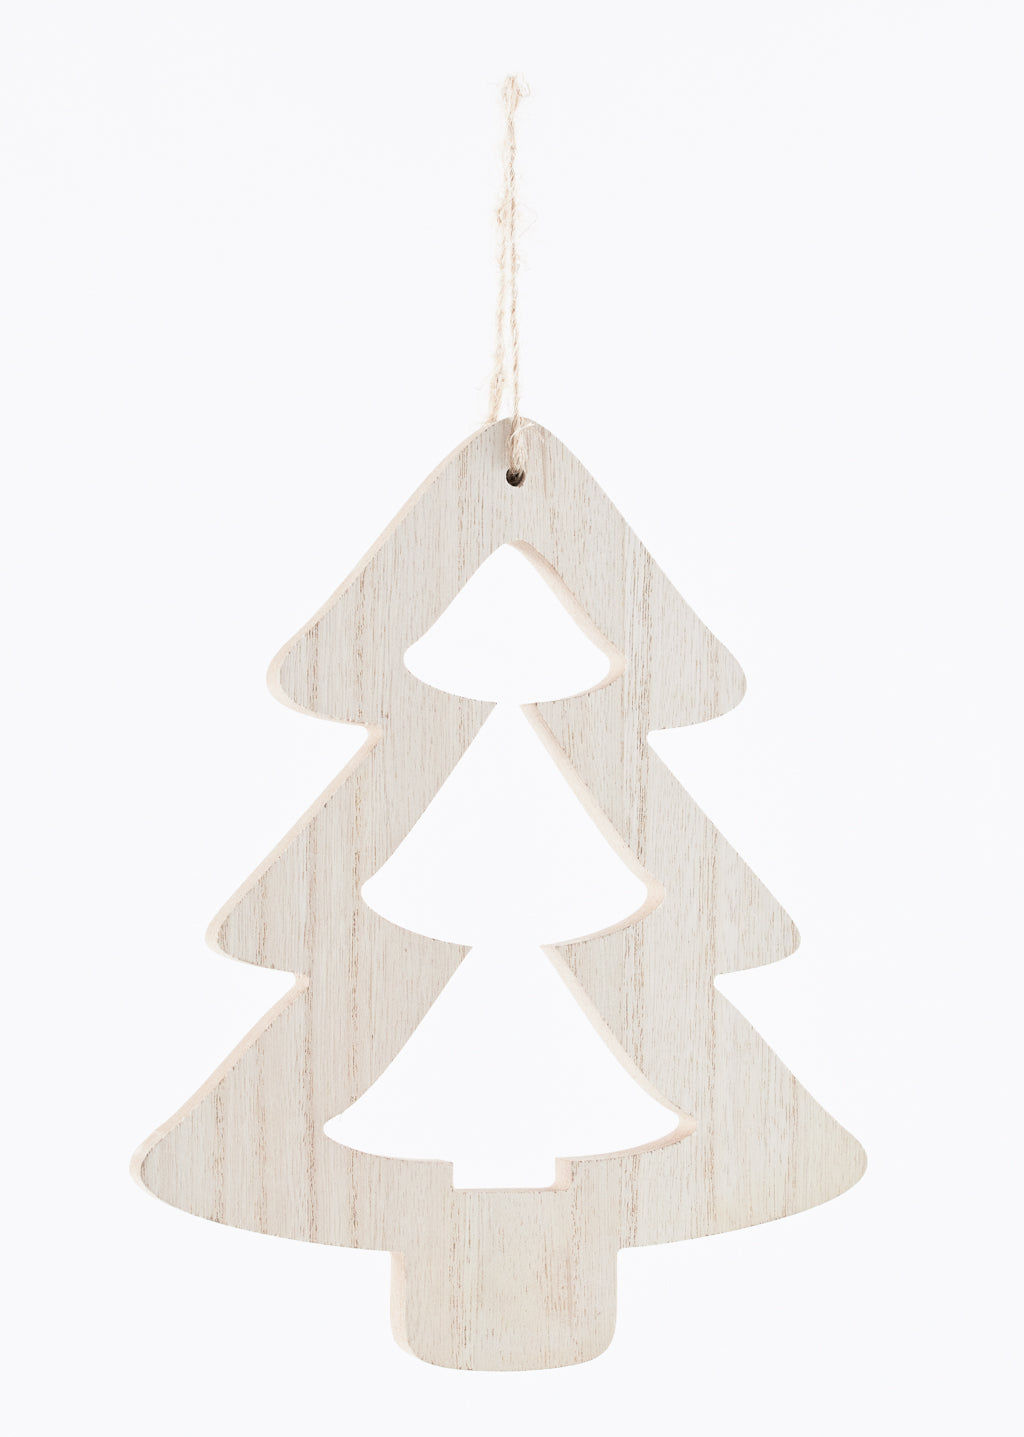 Cutout Wood Tree Ornament